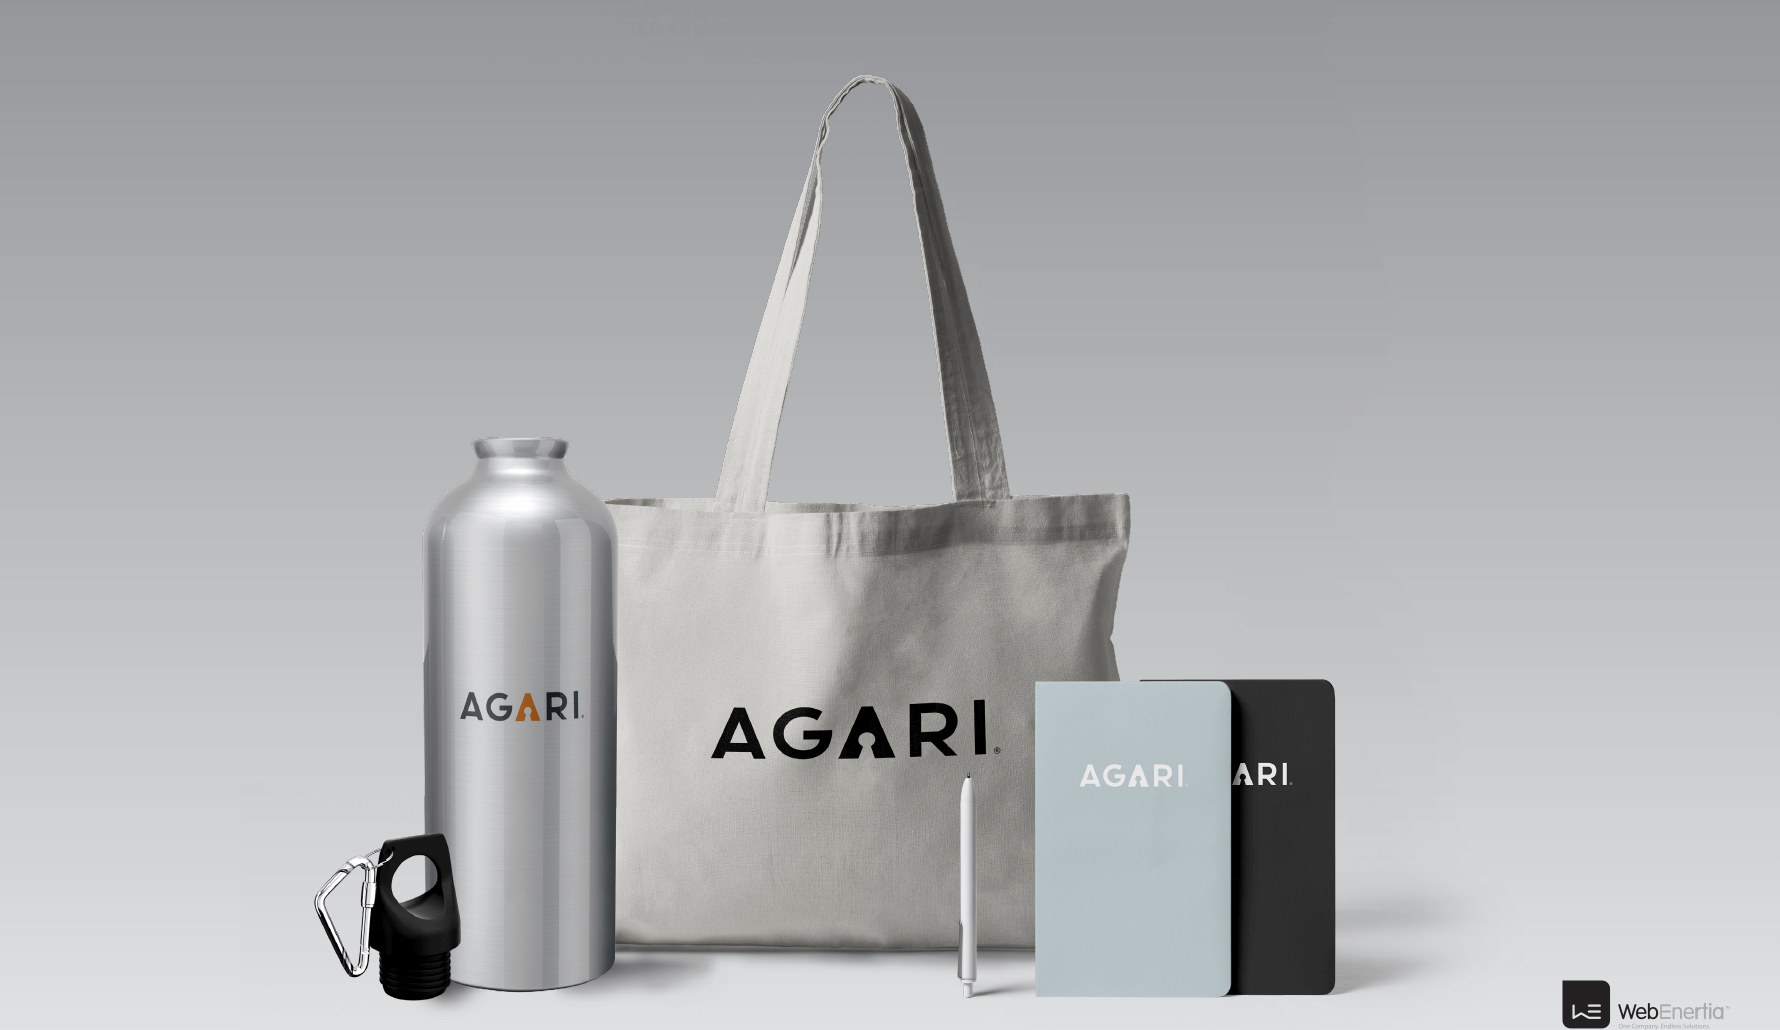 Agari Brand Design logo treatment on merchandise